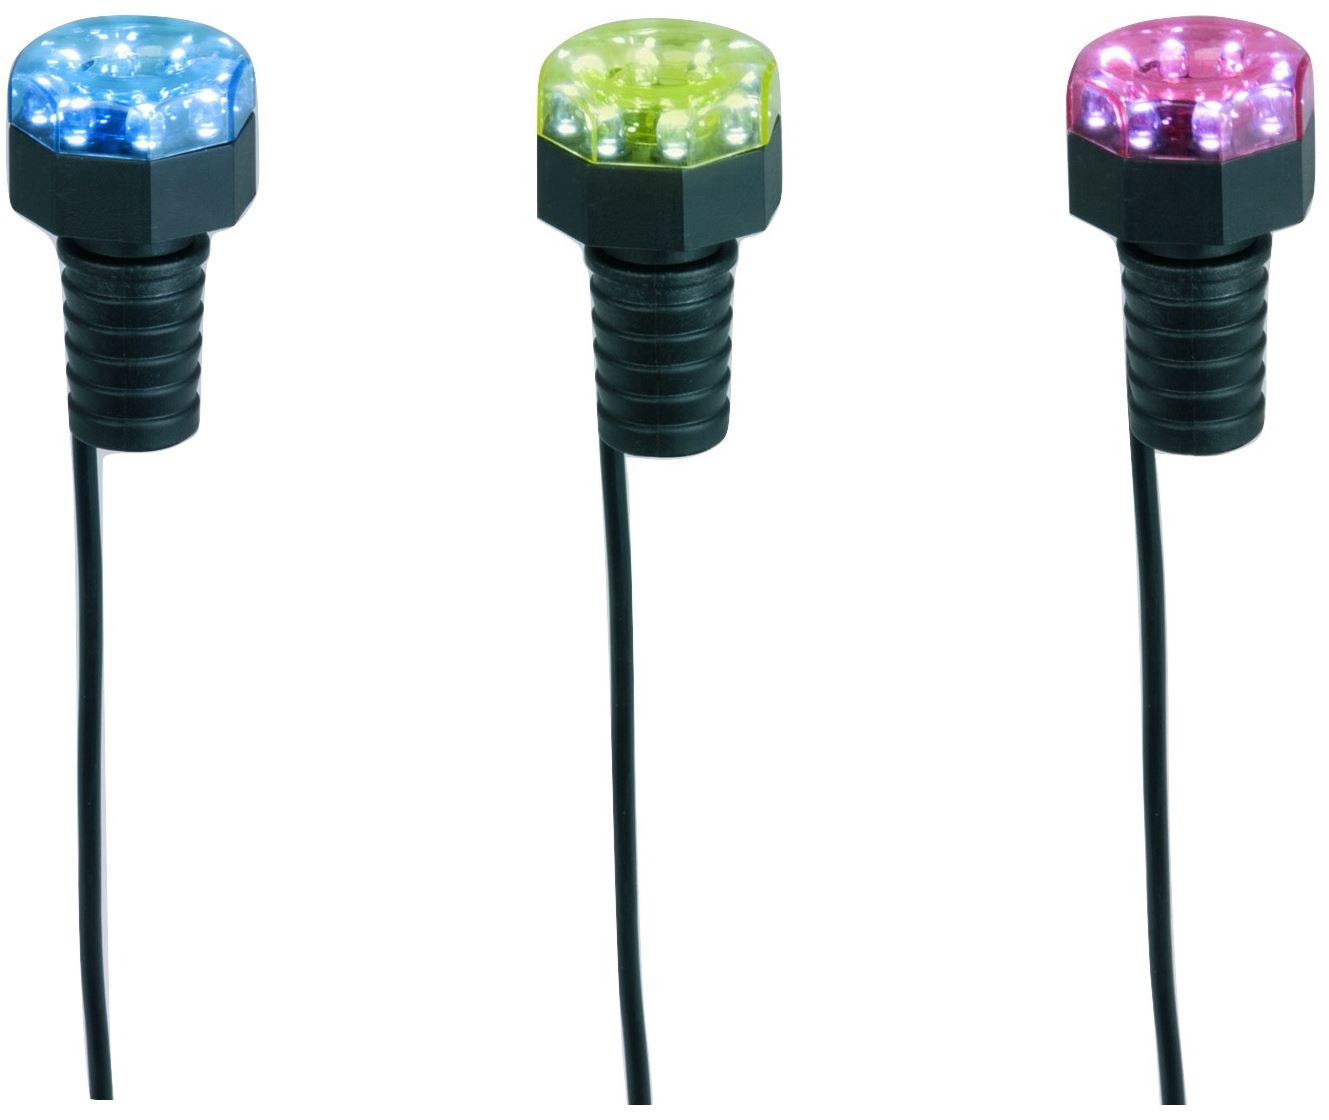 Reserve-onderwaterledlampen-voor-MiniBright-1x8-LED-s-et-3x8-LED-s-3-gekleurde-kappen-koud-wit-verli